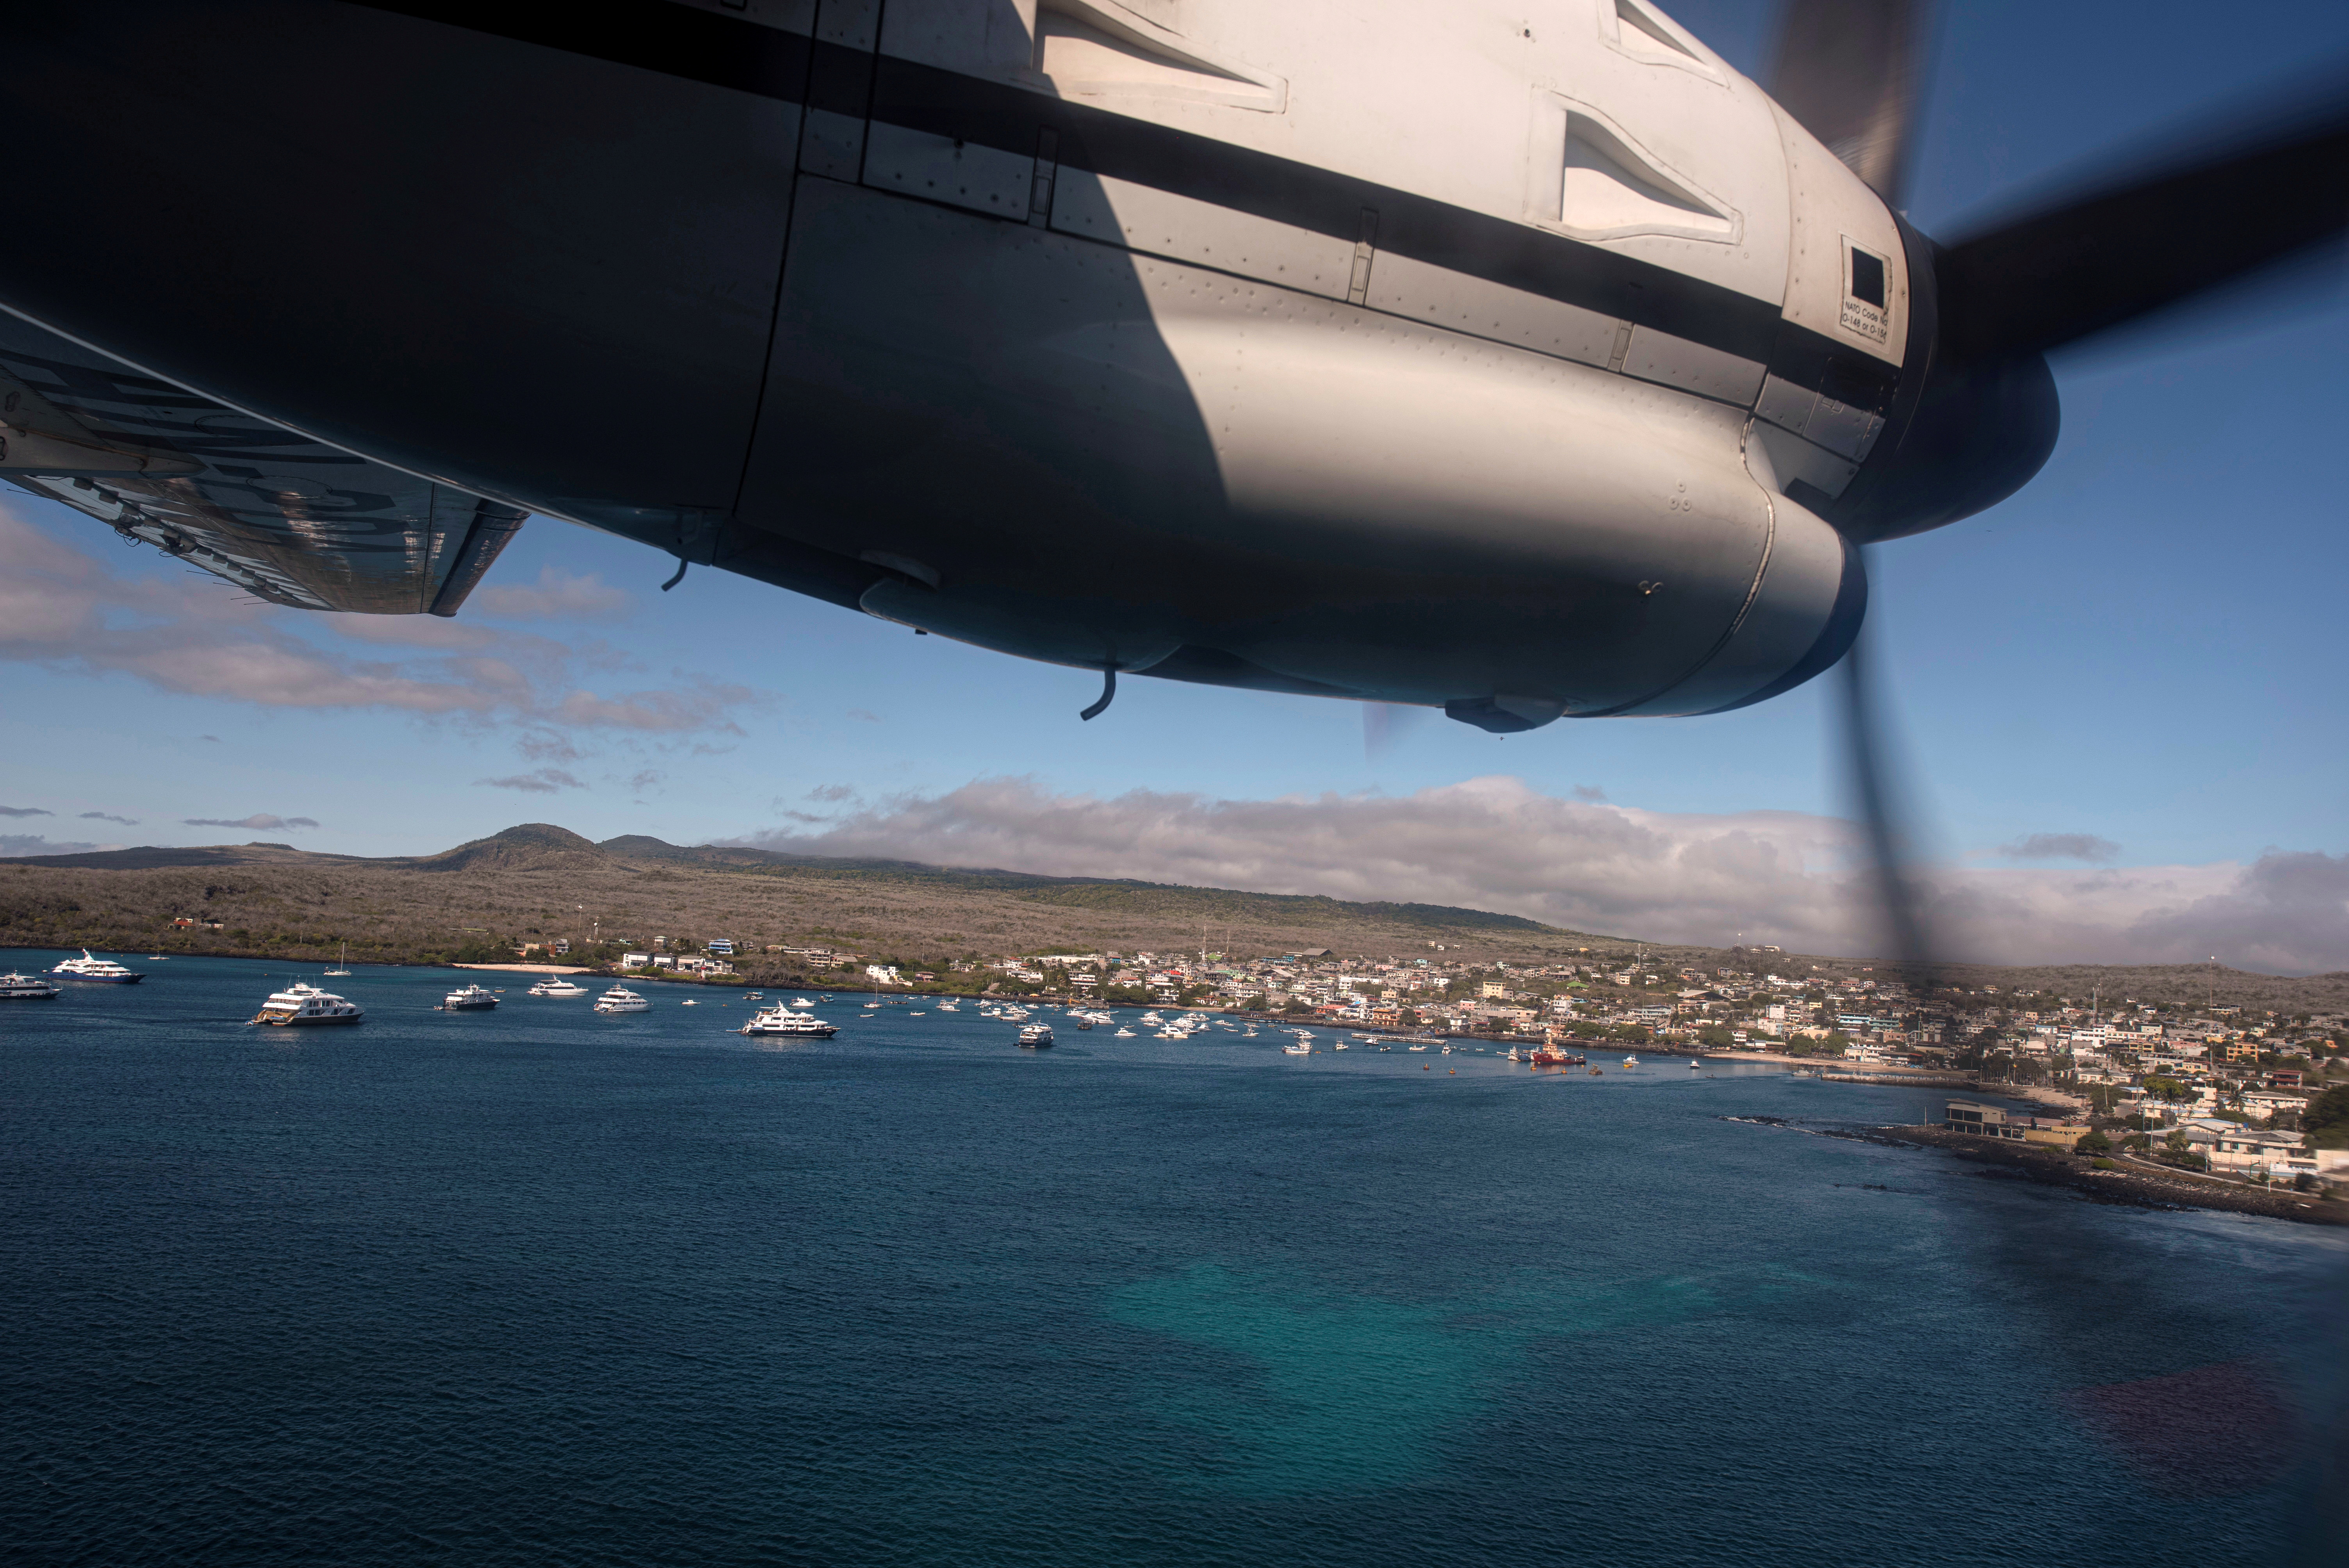 An Ecuadorian navy aircraft is preparing to land in San Cristobal, Galapagos Islands